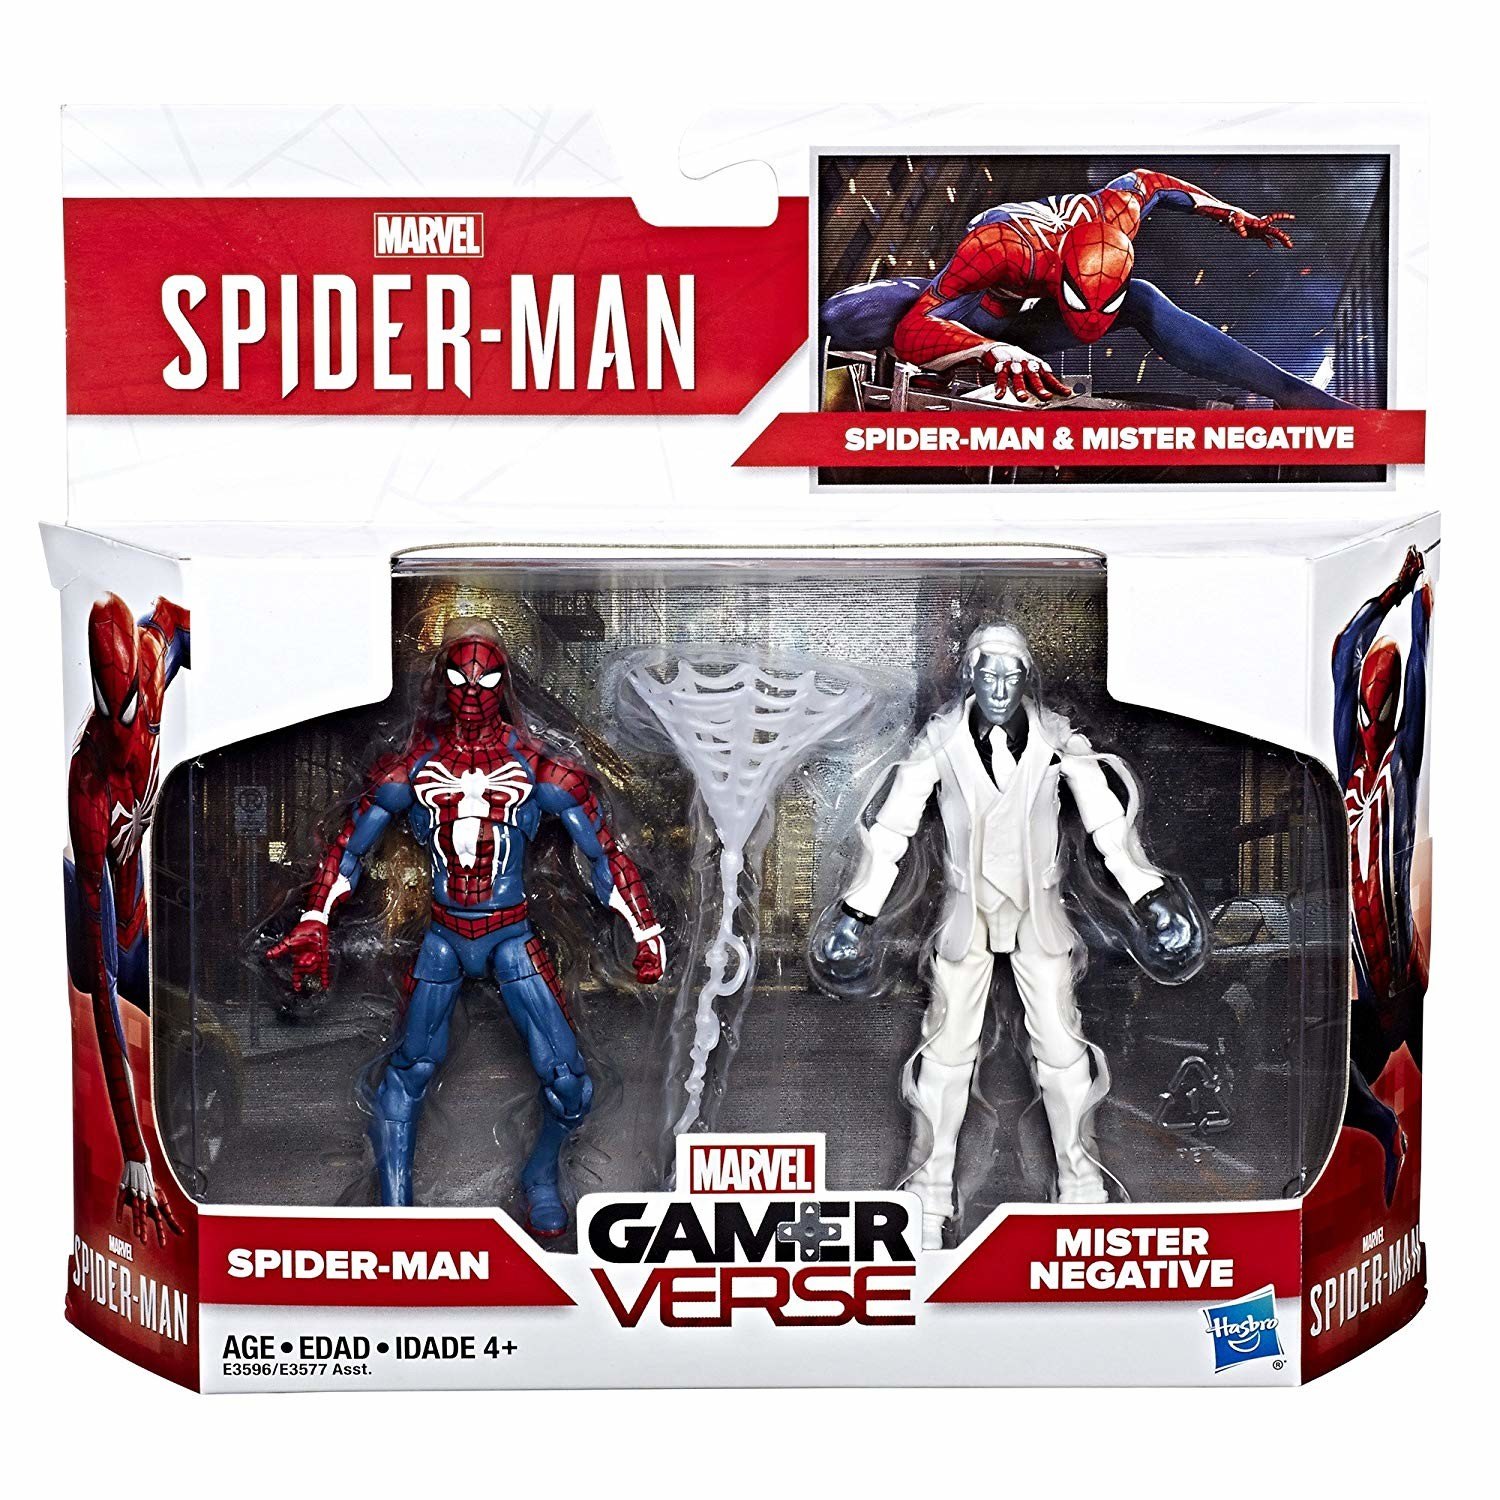 marvel legends series spiderman